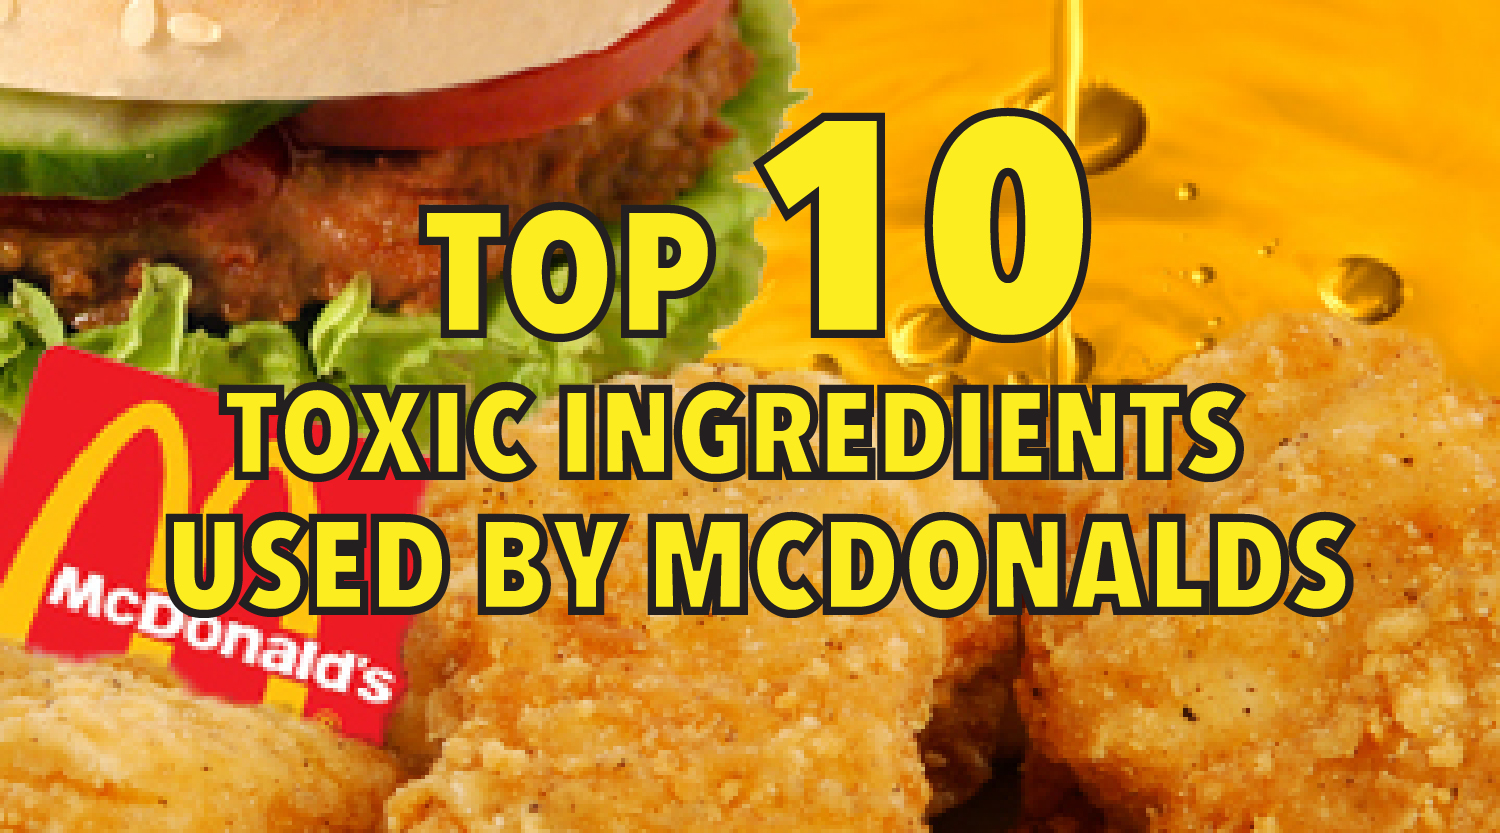 Top 10 toxic ingredients used by mcdonalds